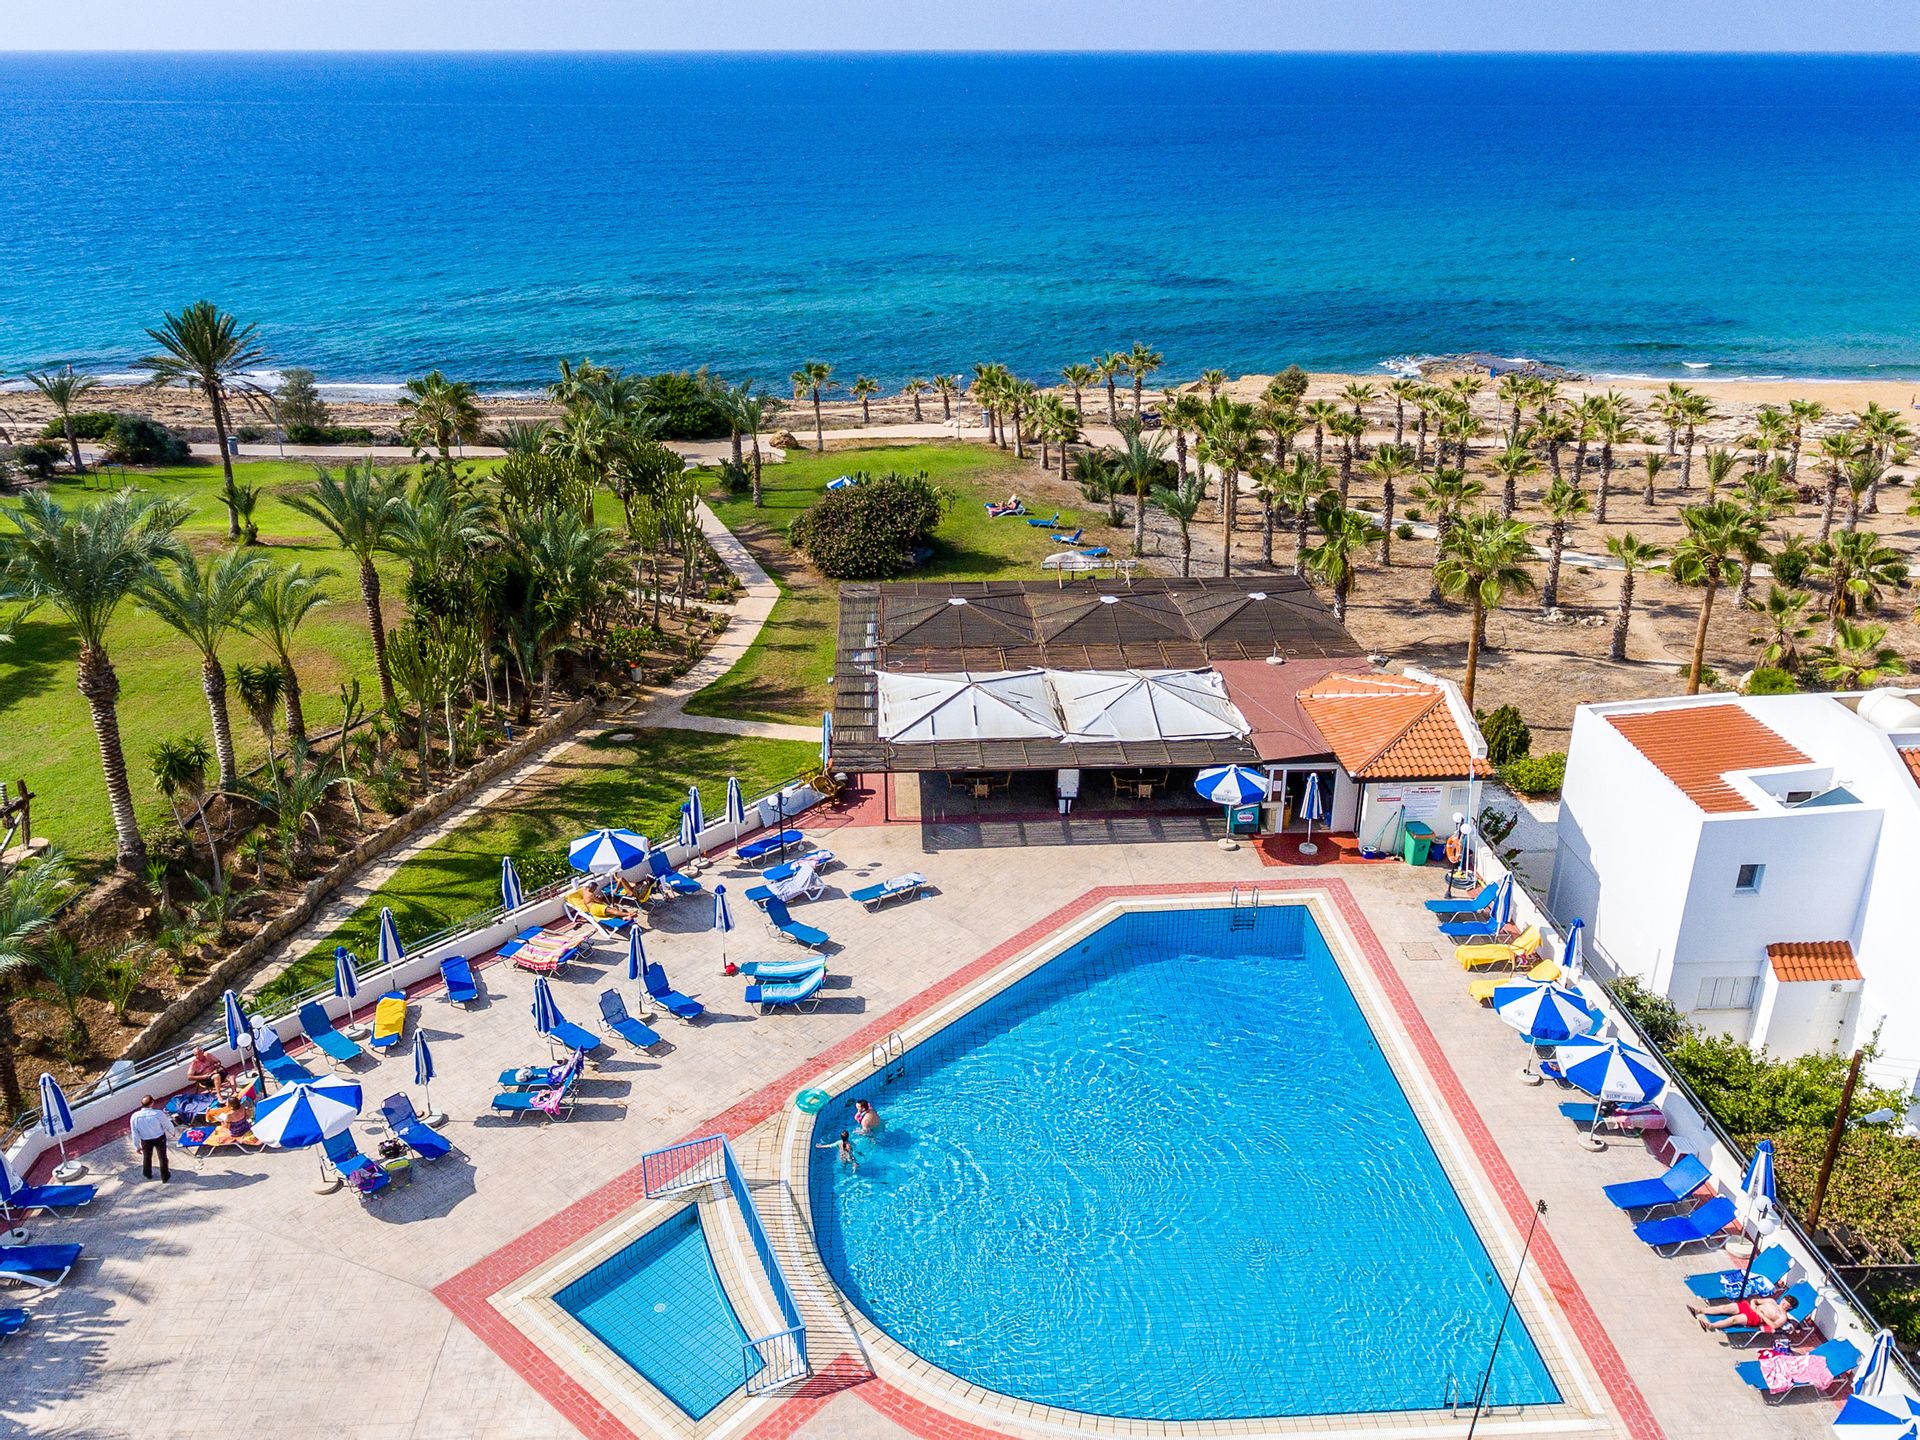 Helios Bay Hotel and Suites - Πάφος, Κύπρος ✦ 2 Ημέρες (1 Διανυκτέρευση) ✦ 2 άτομα ✦ 1 ✦ έως 30/09/2022 ✦ Δίπλα στη Θάλασσα!